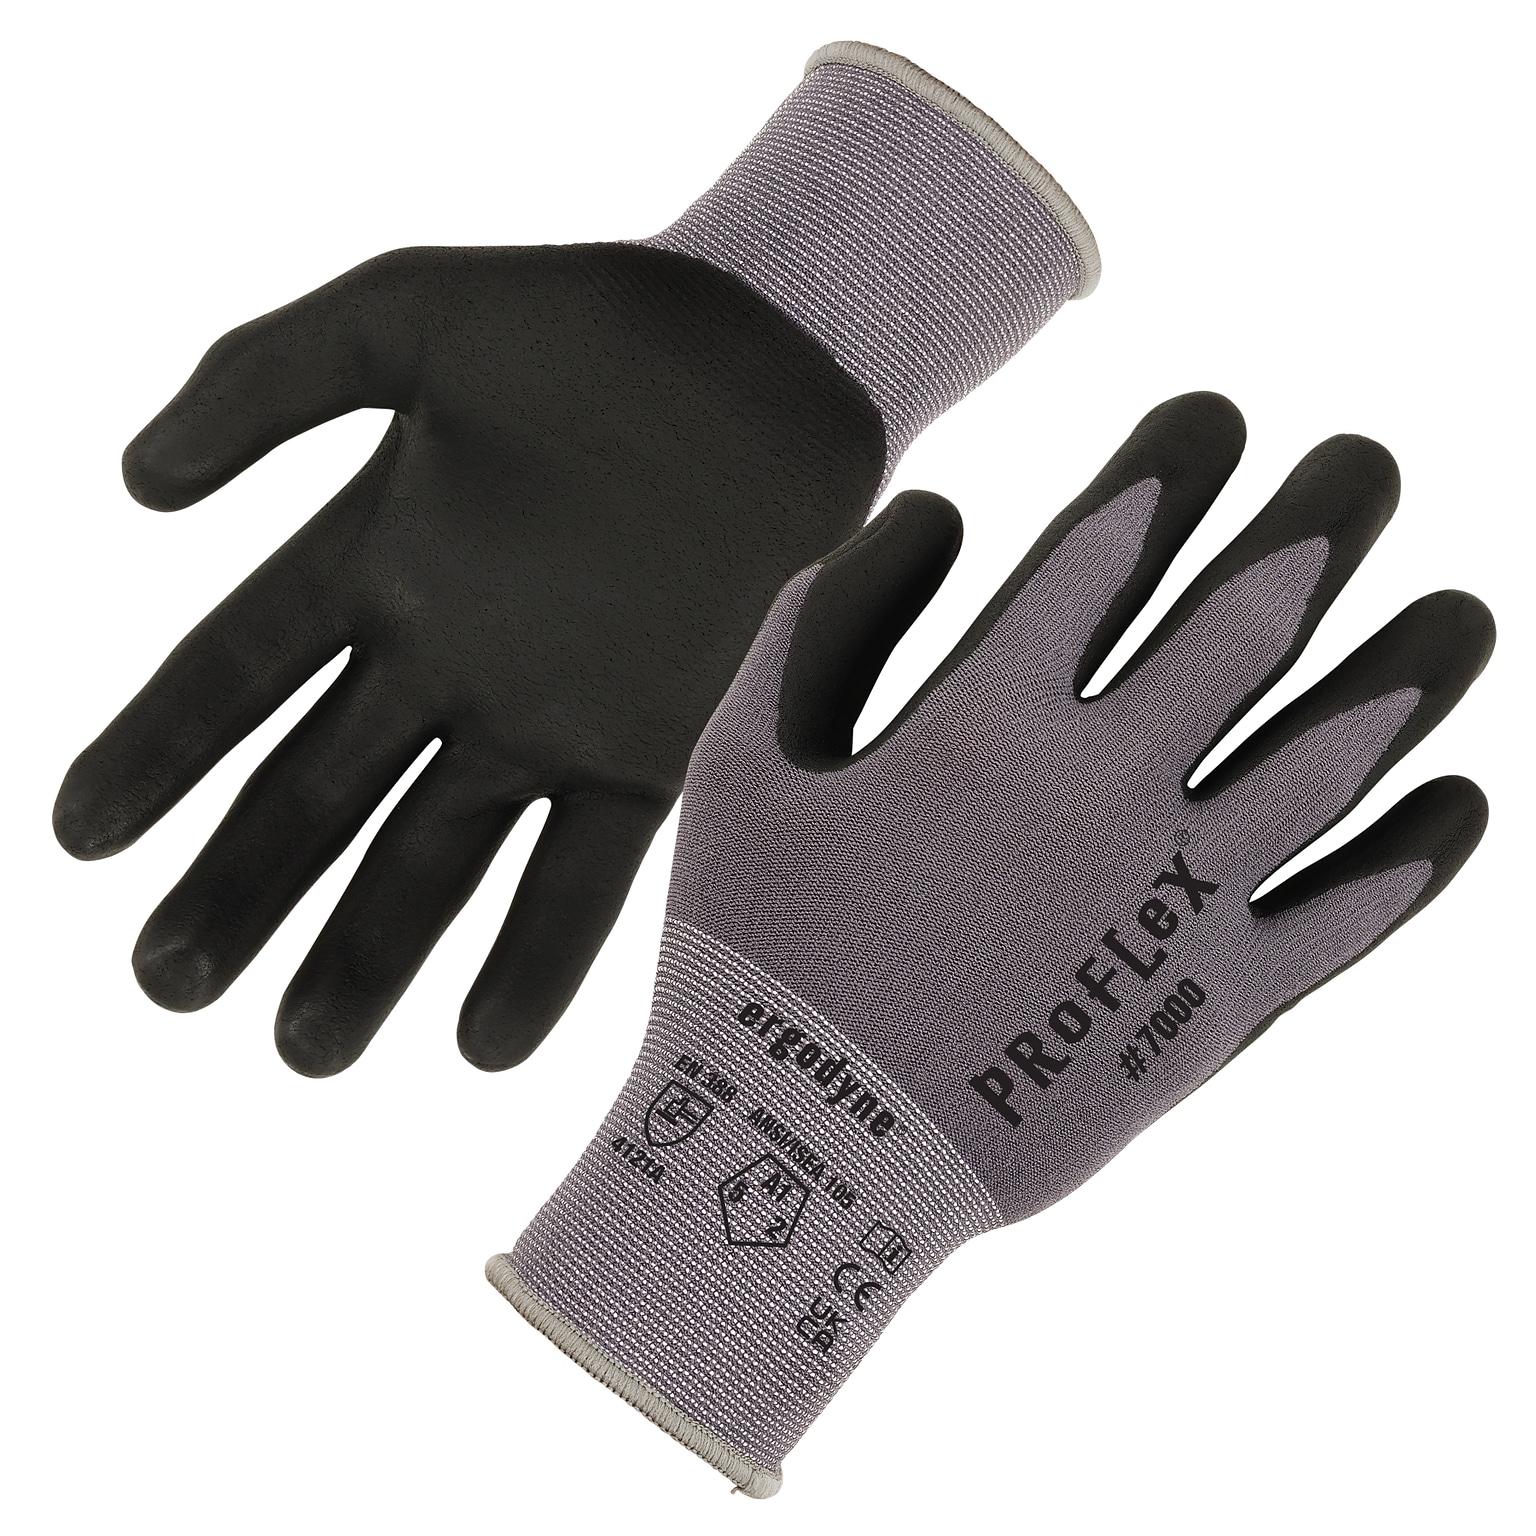 Ergodyne ProFlex 7000 Nitrile Coated Gloves, Microfoam Palm, ANSI Level 5 Abrasion Resistance, Gray, Small, 1 Pair (10372)